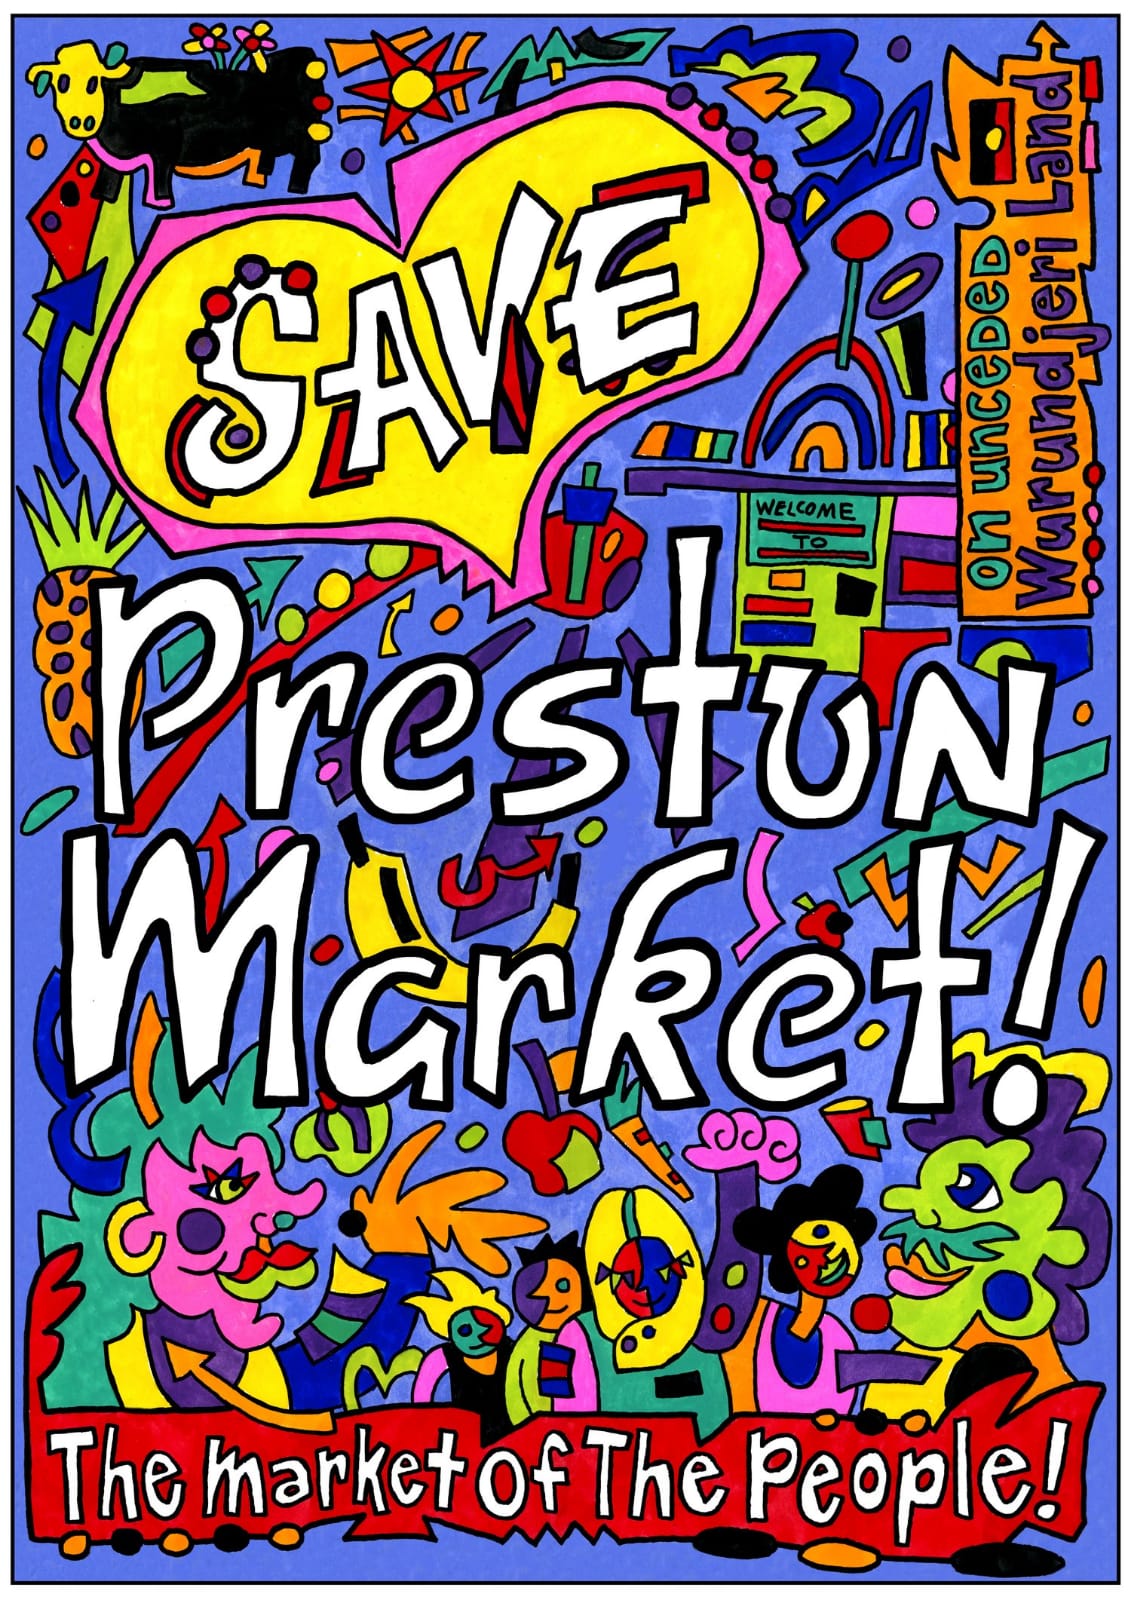 "SAVE THE PRESTON MARKET on unceeded Wurundjeri Land - The Market Of The People!"